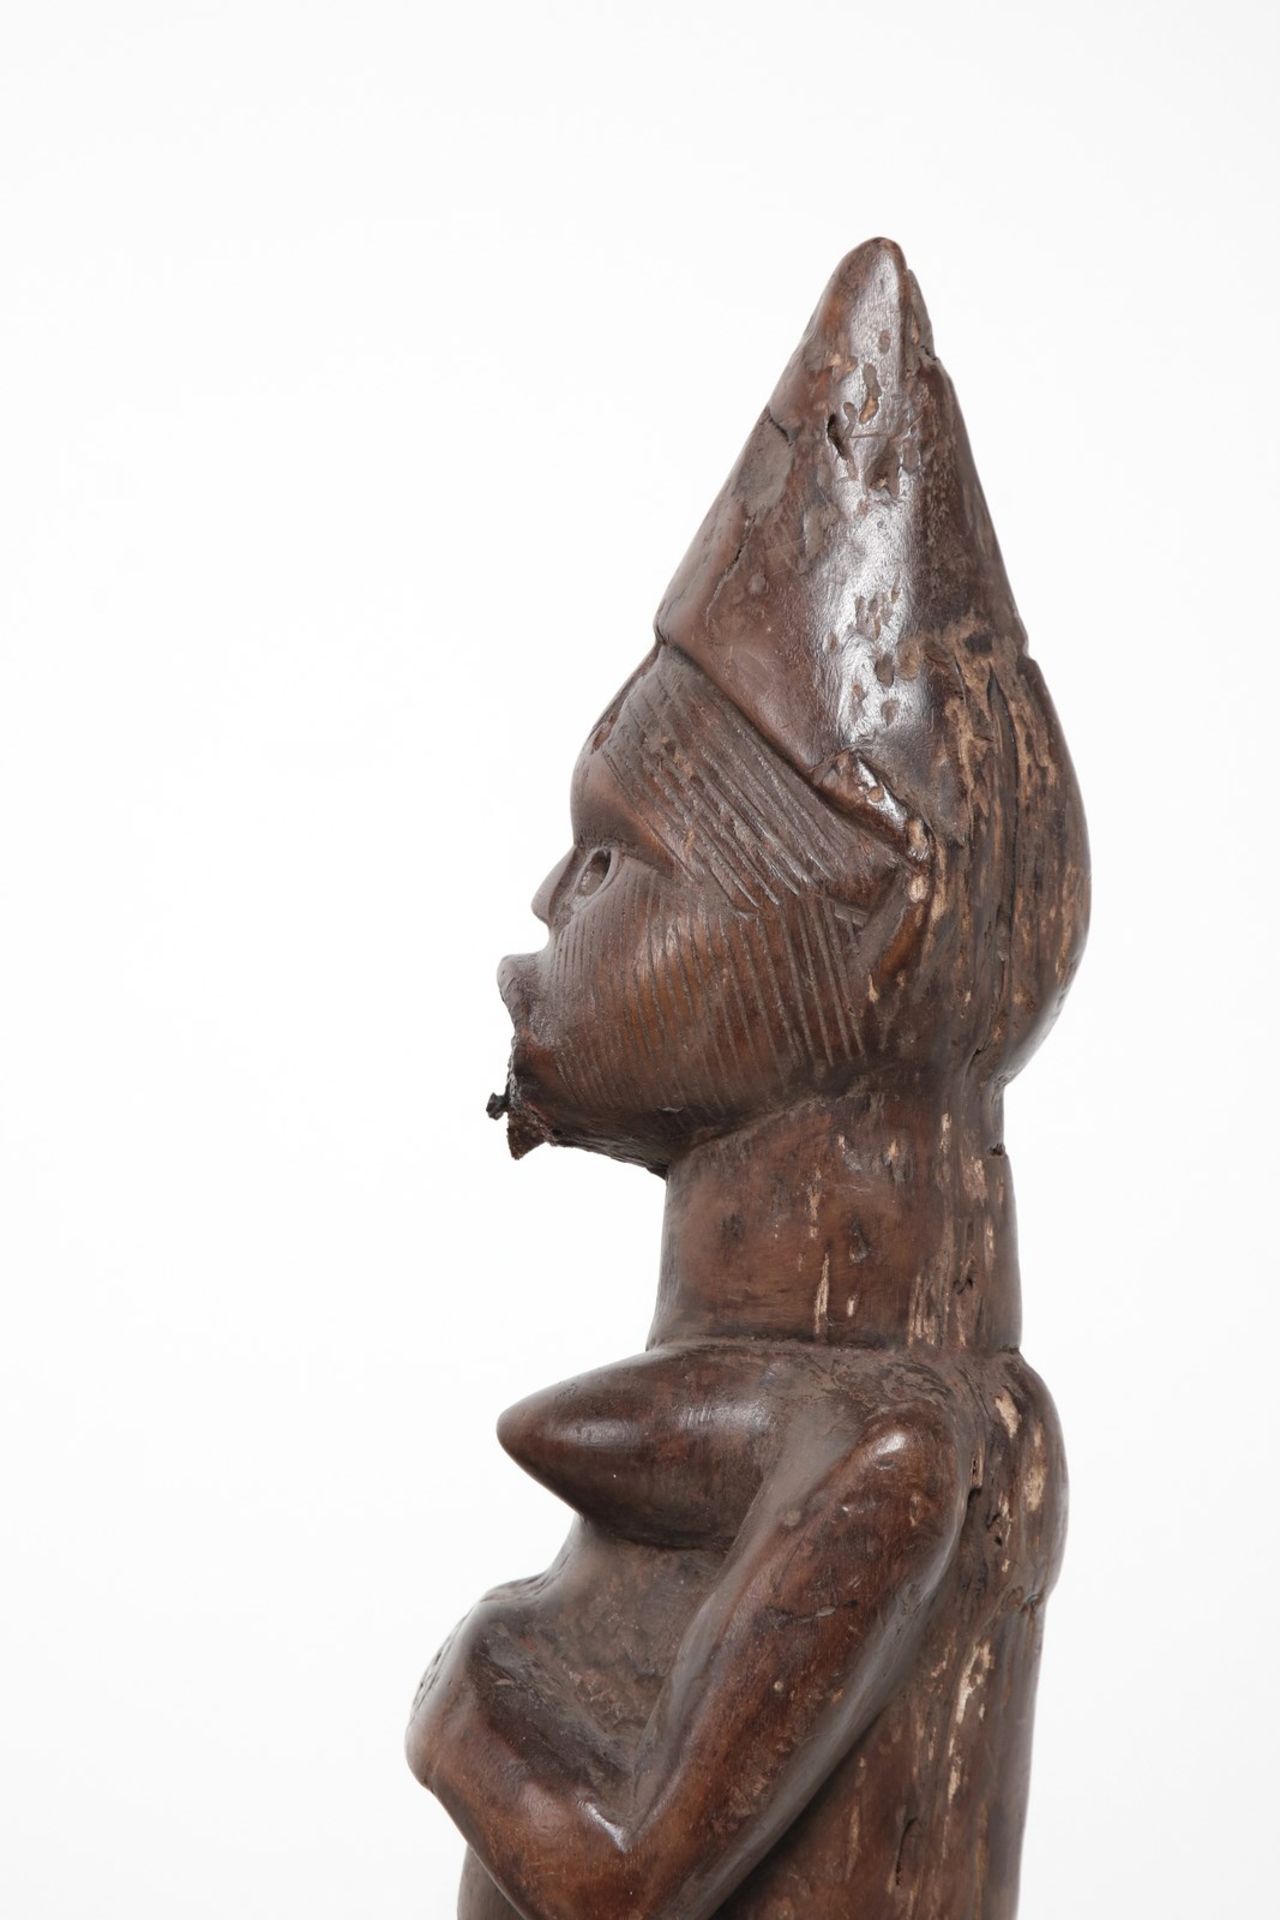 Arte africana Two African statuettesIvory Coast and Congo. - Bild 4 aus 5